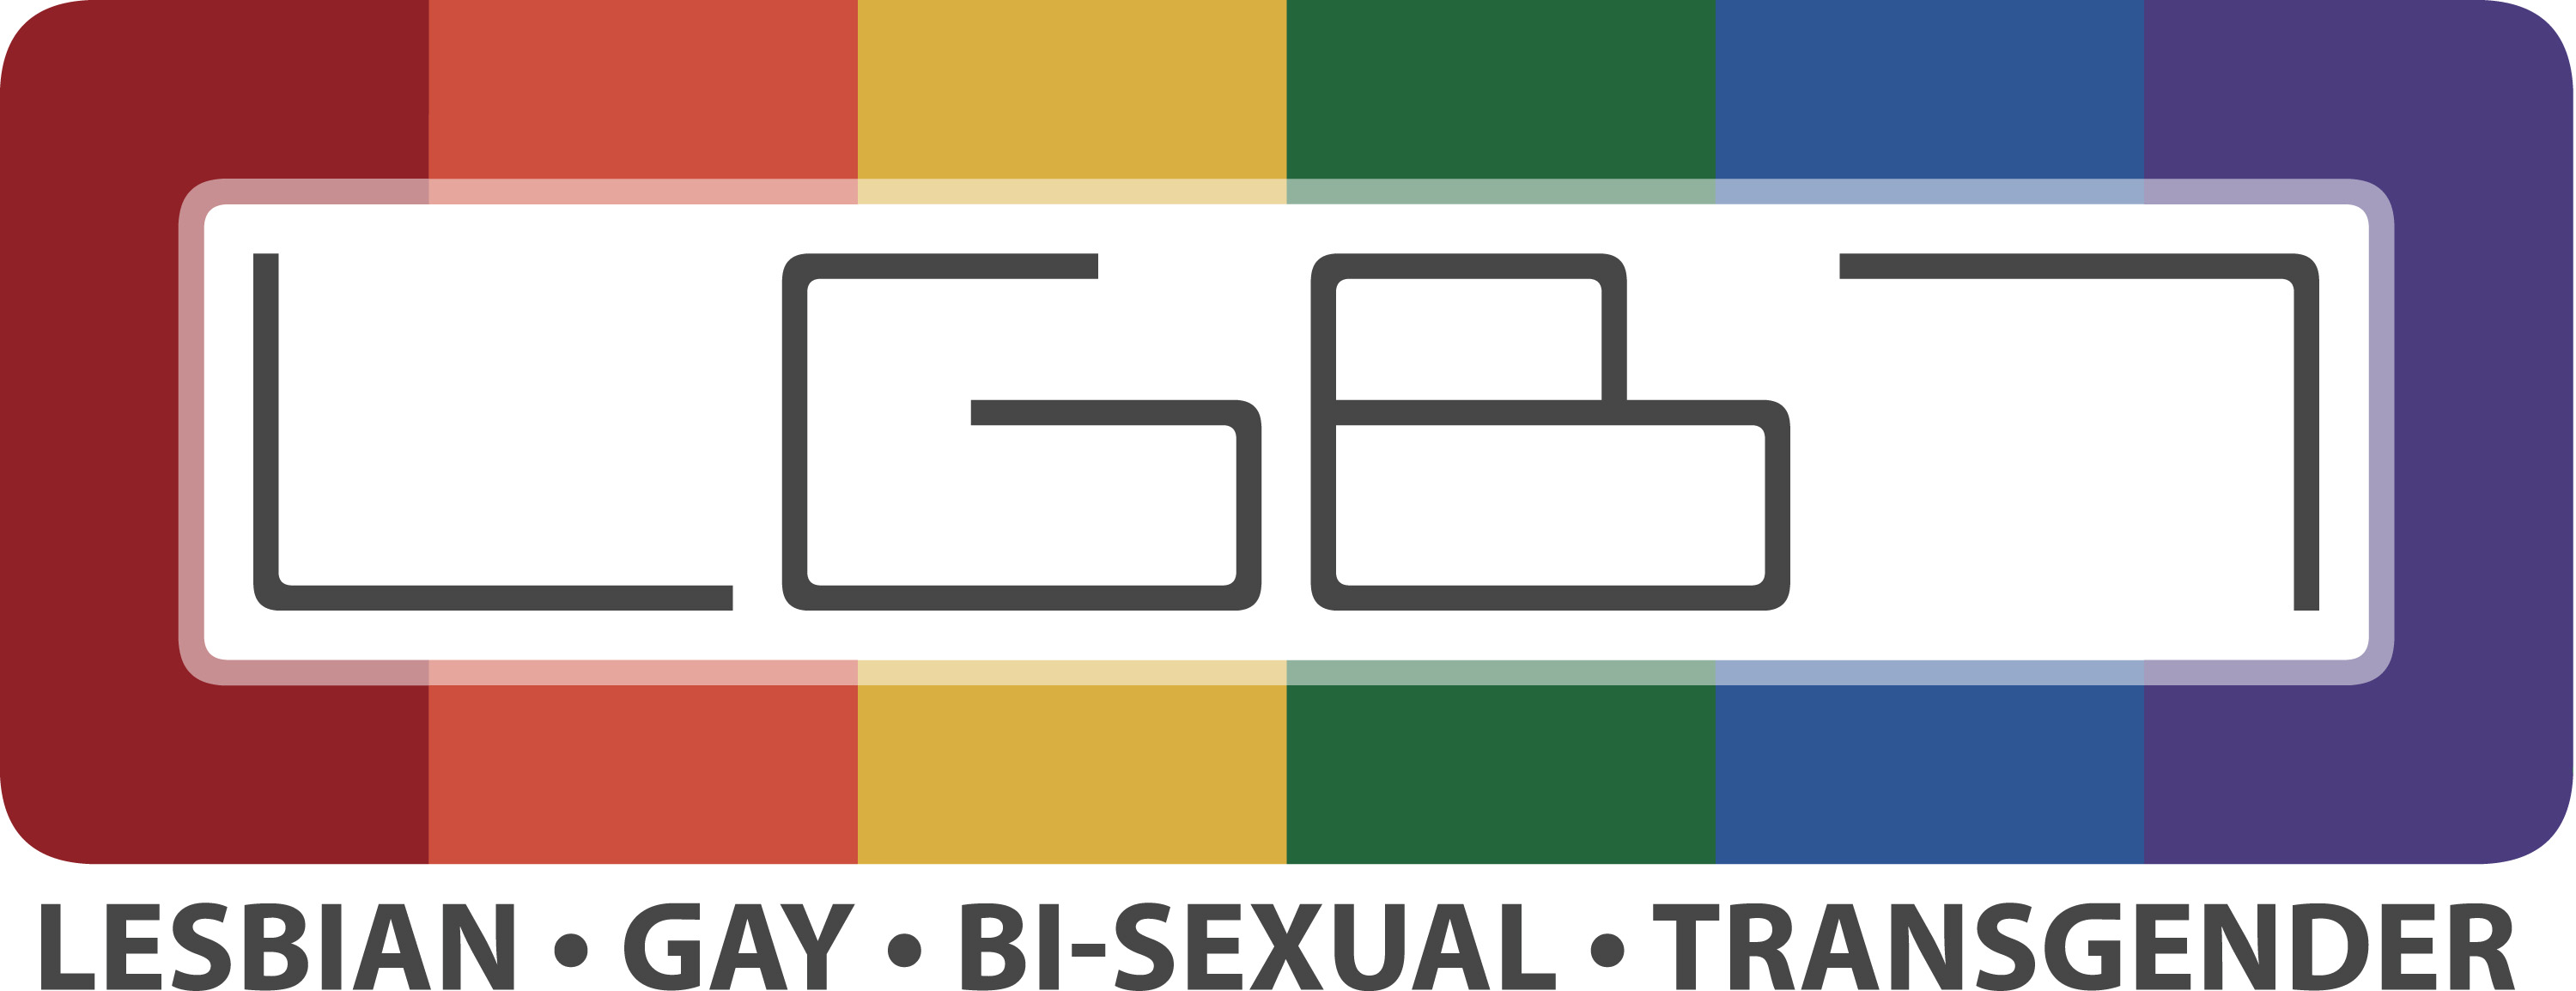 LGBT_Banner